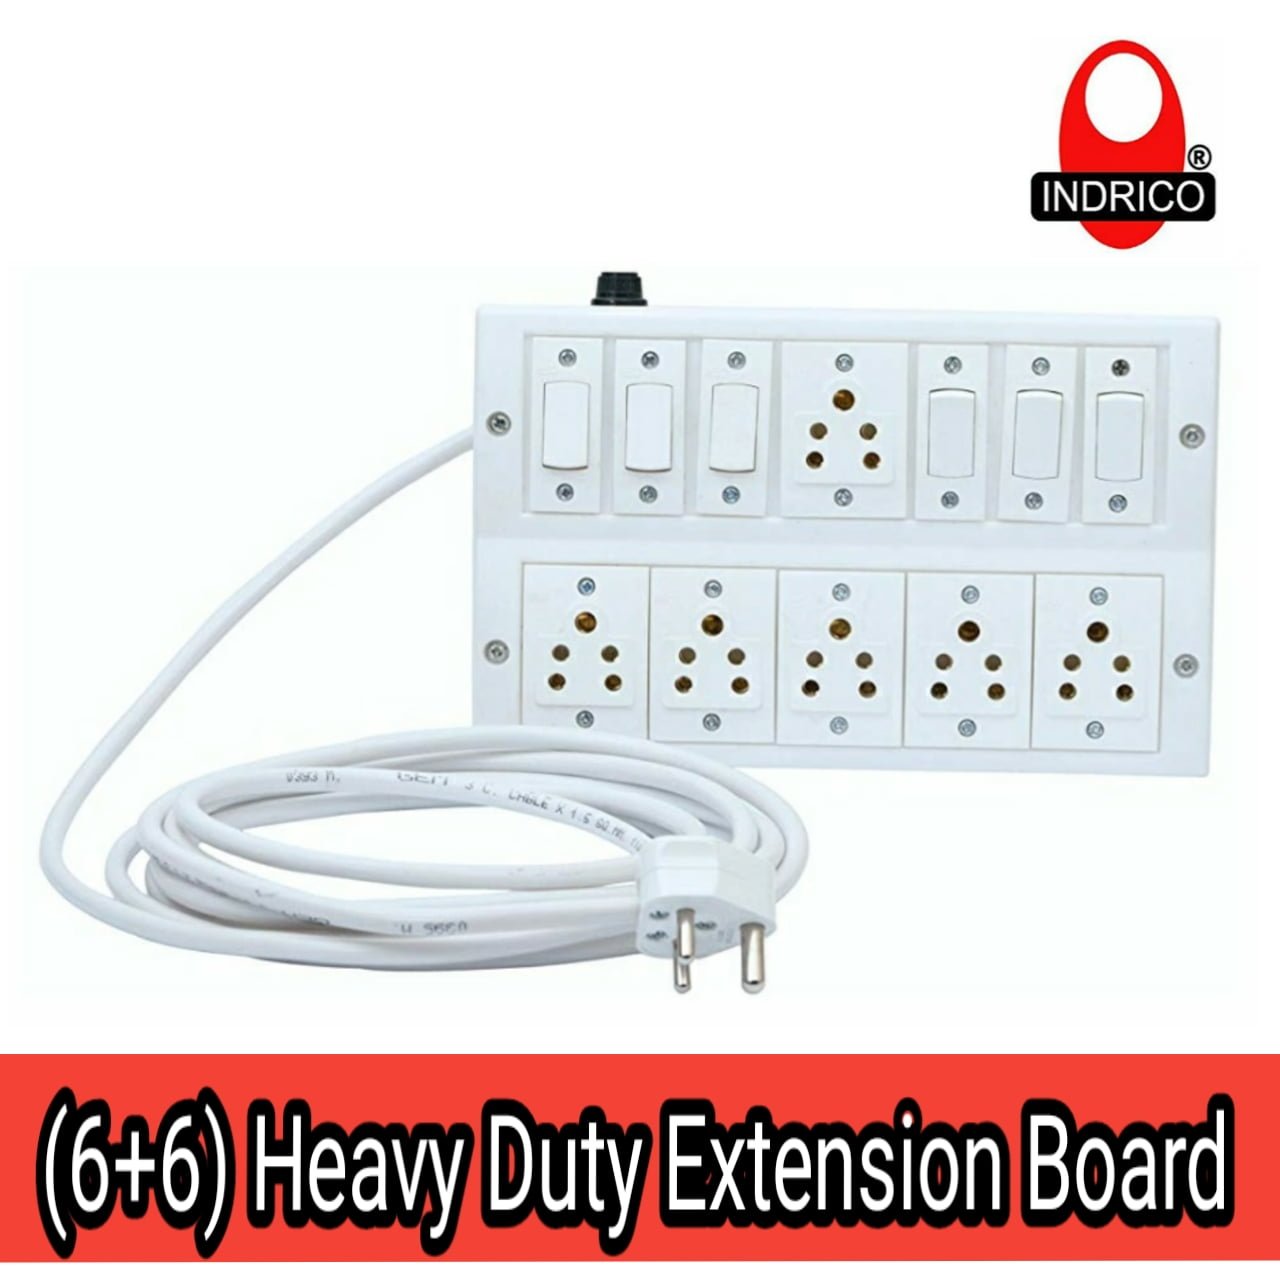 INDRICO® Heavy Duty Extension Board (6+6) Anchor 1.5mm 3 Core Heavy Wire (White)